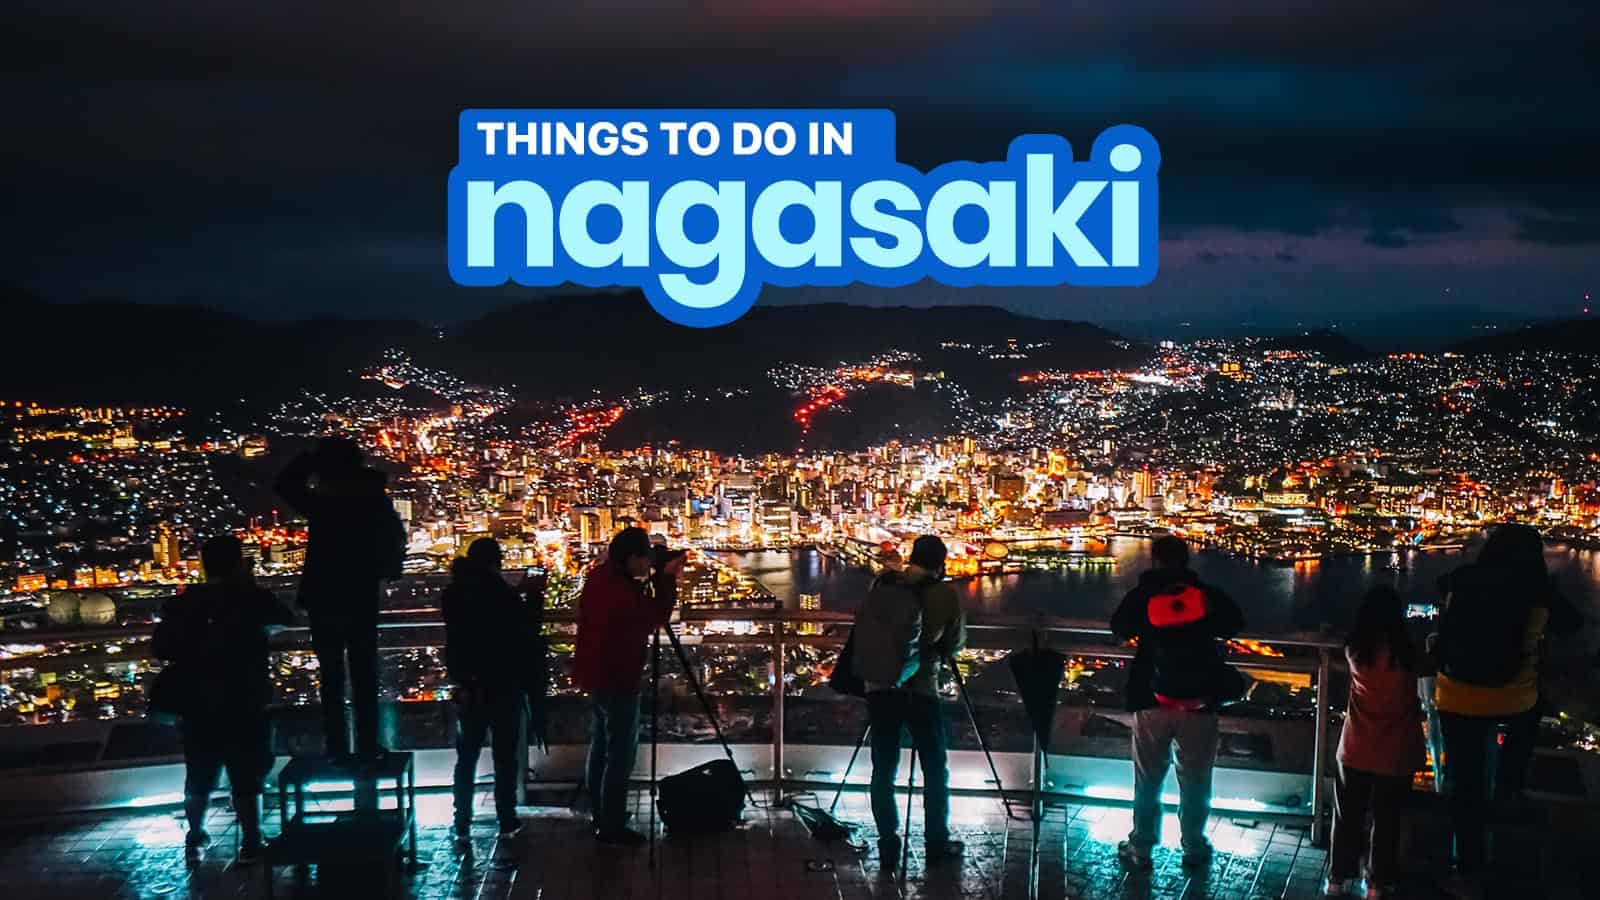 20 BEST THINGS TO DO IN NAGASAKI